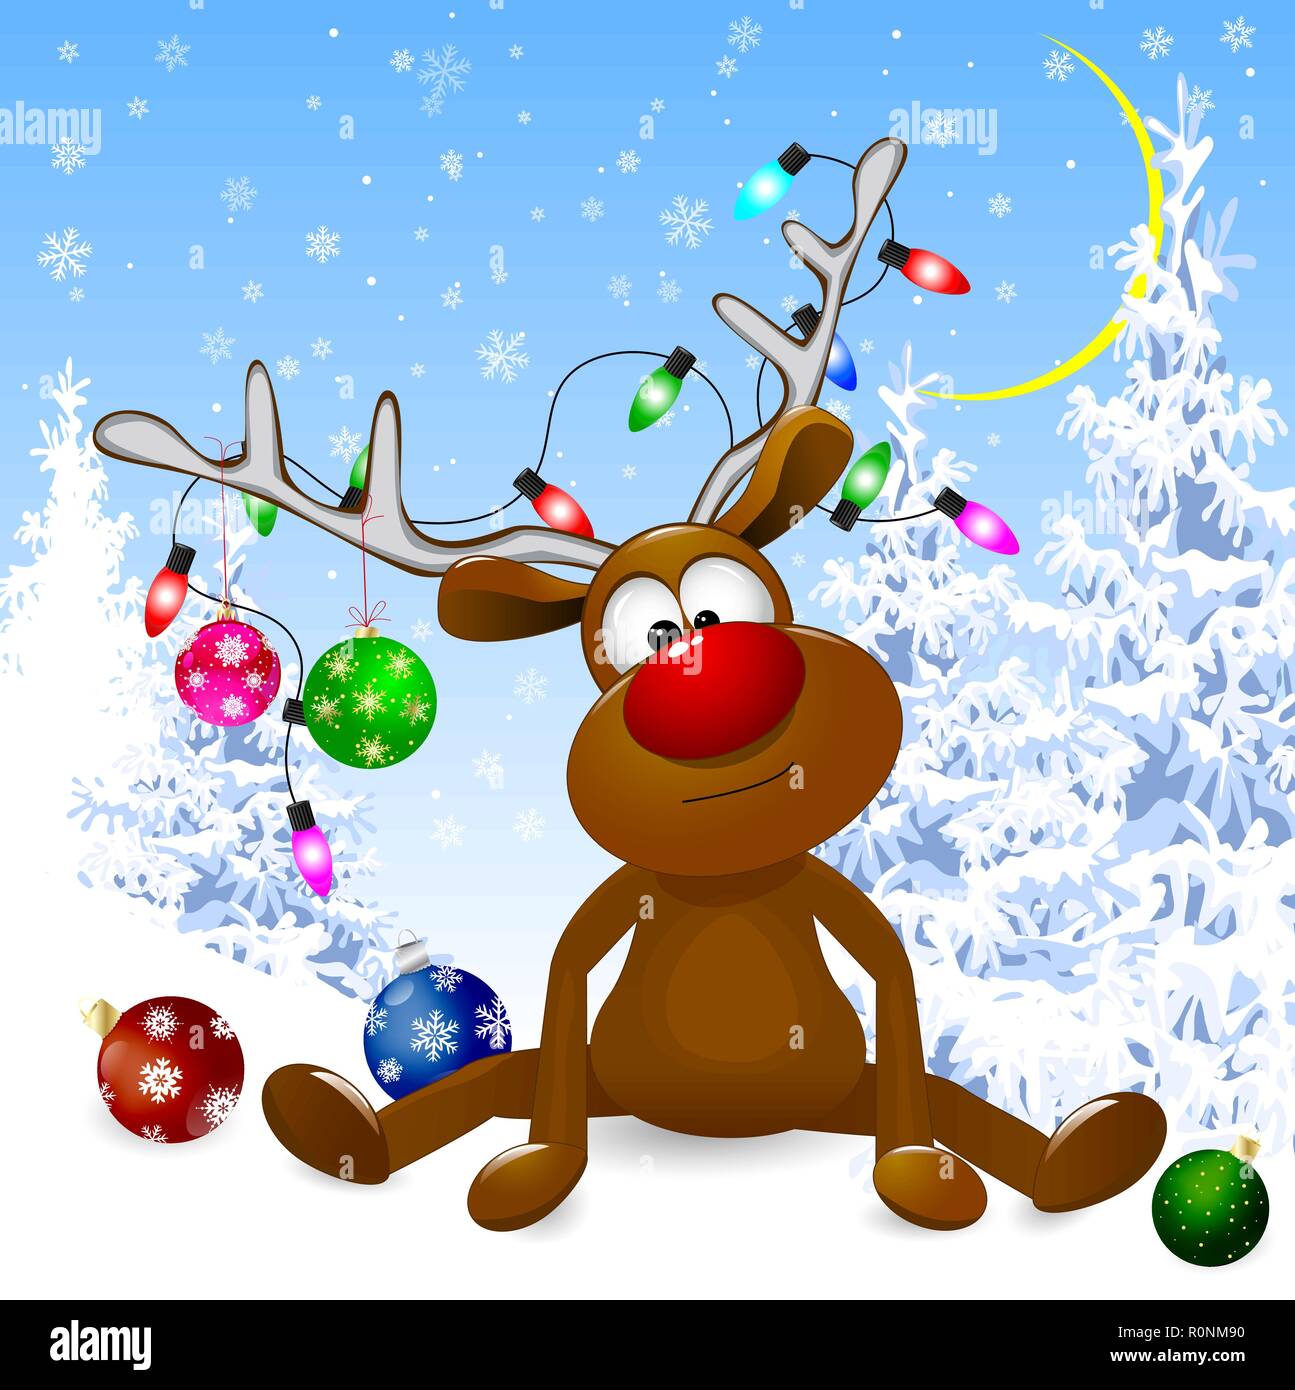 D-GROEE Christmas Ribbon 2.4 Cartoon Xmas Tree Stocking Elk Star